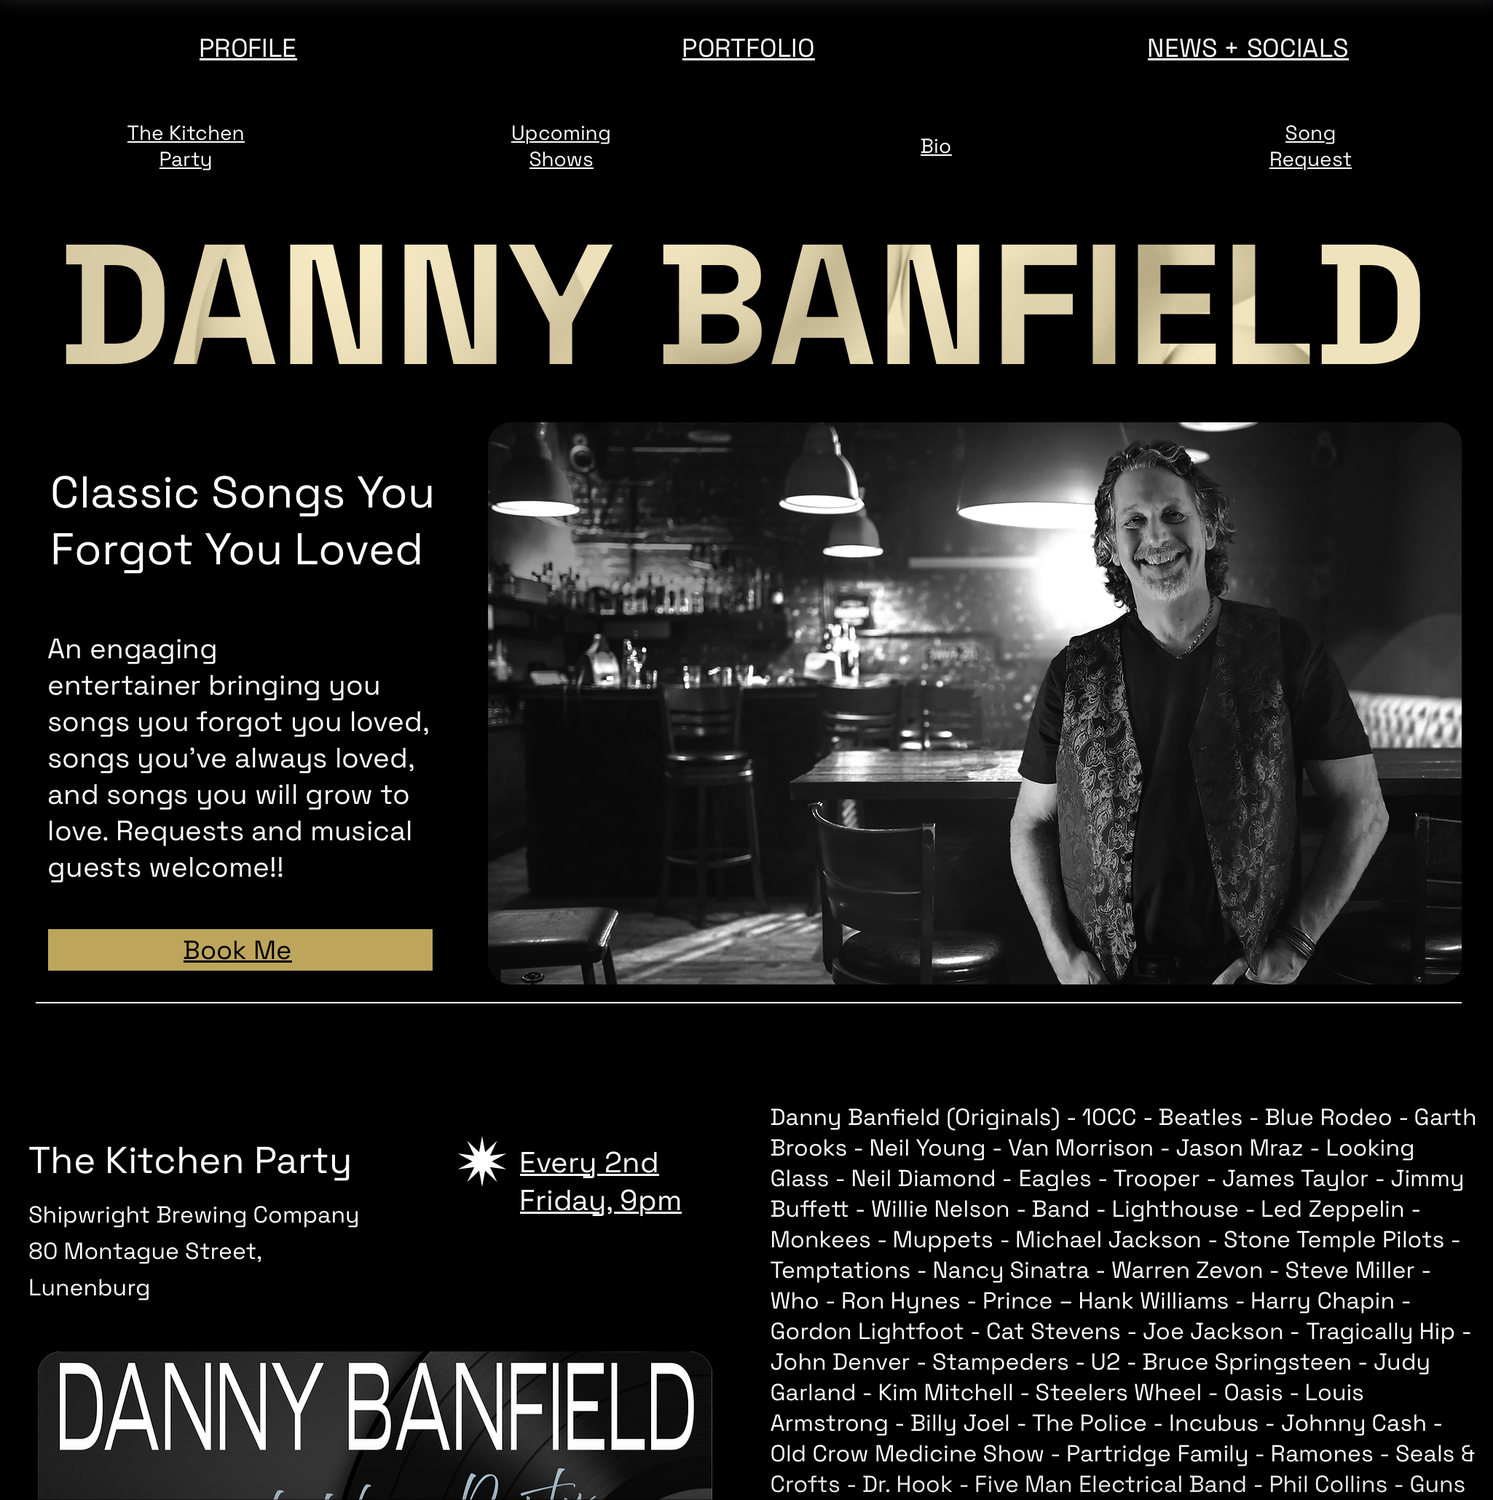 Website - www.dannybanfield.com